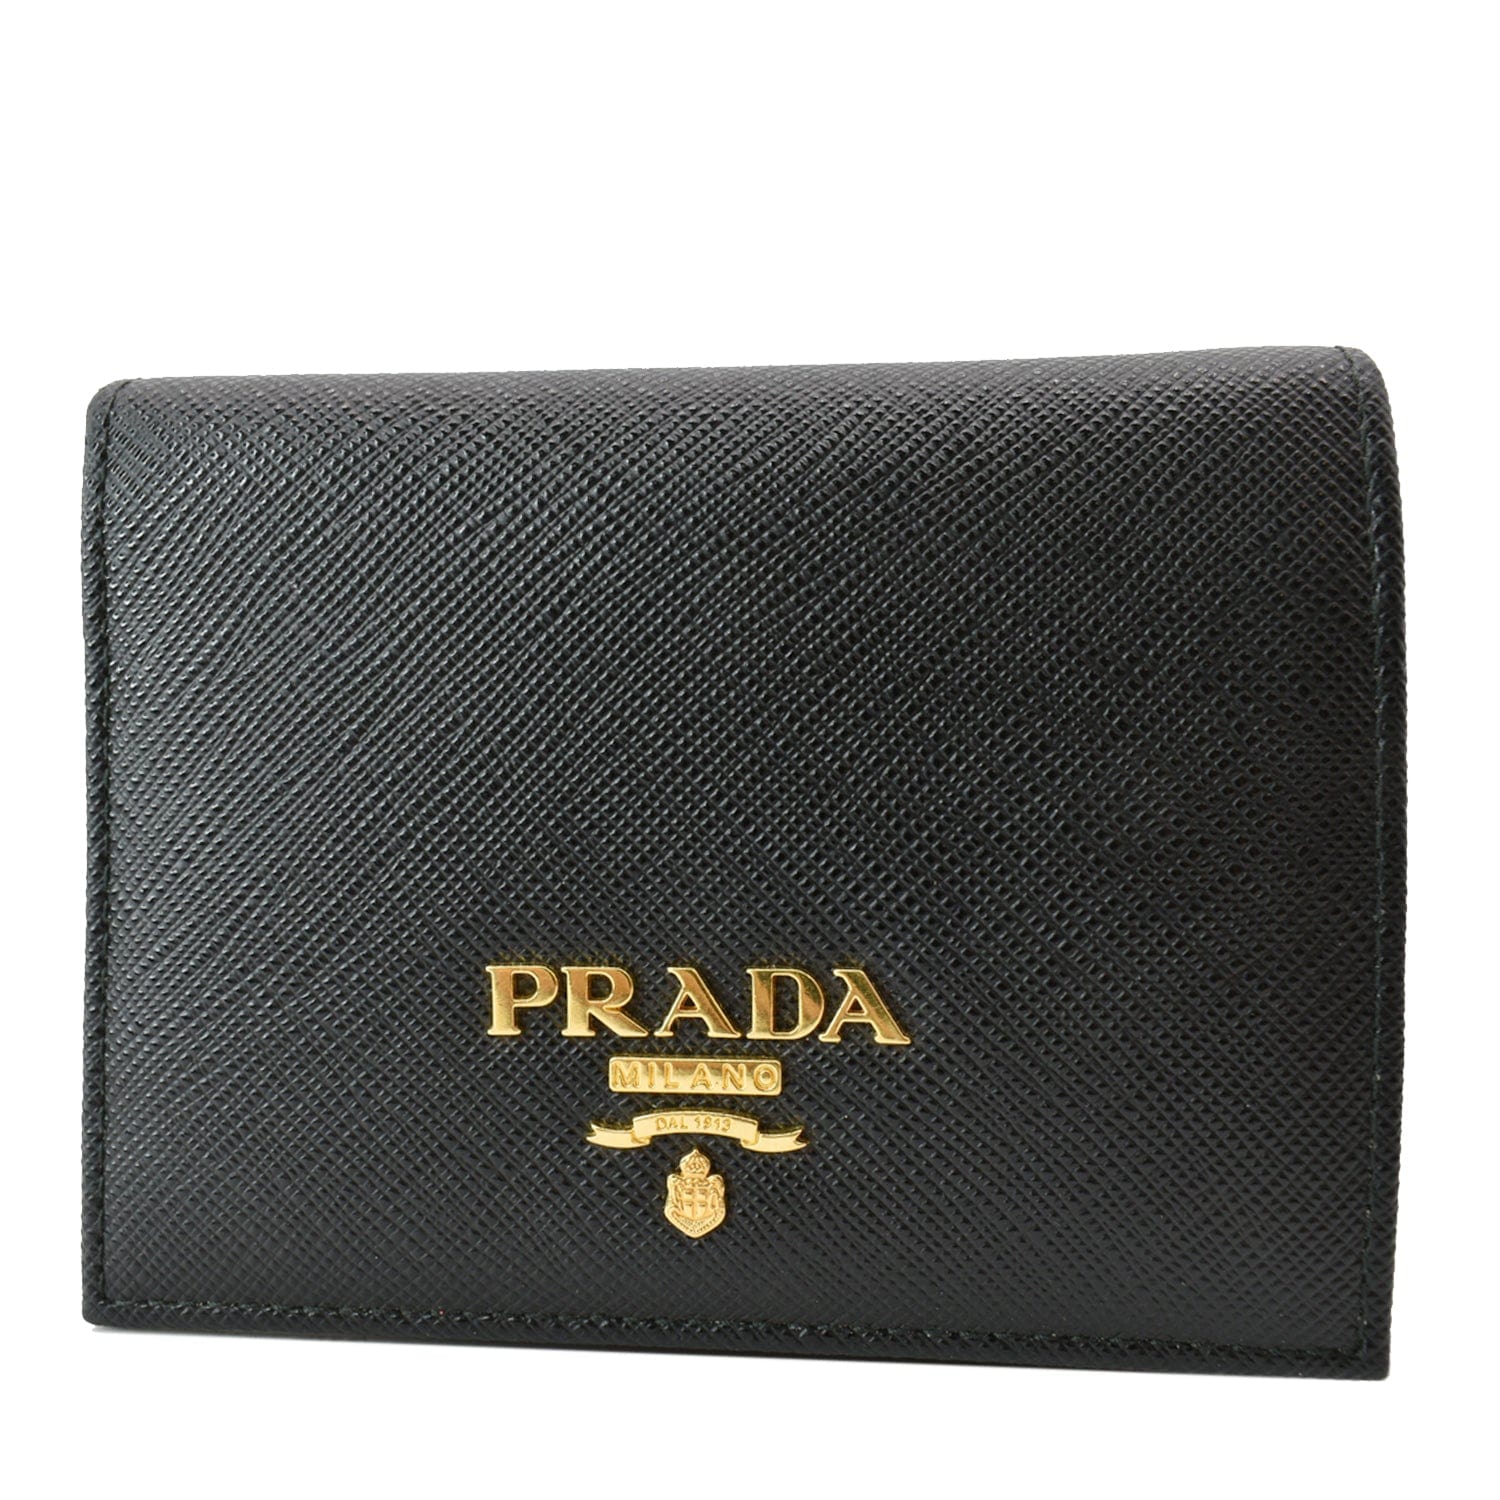 Prada Milano Saffiano Leather Travel Wallet